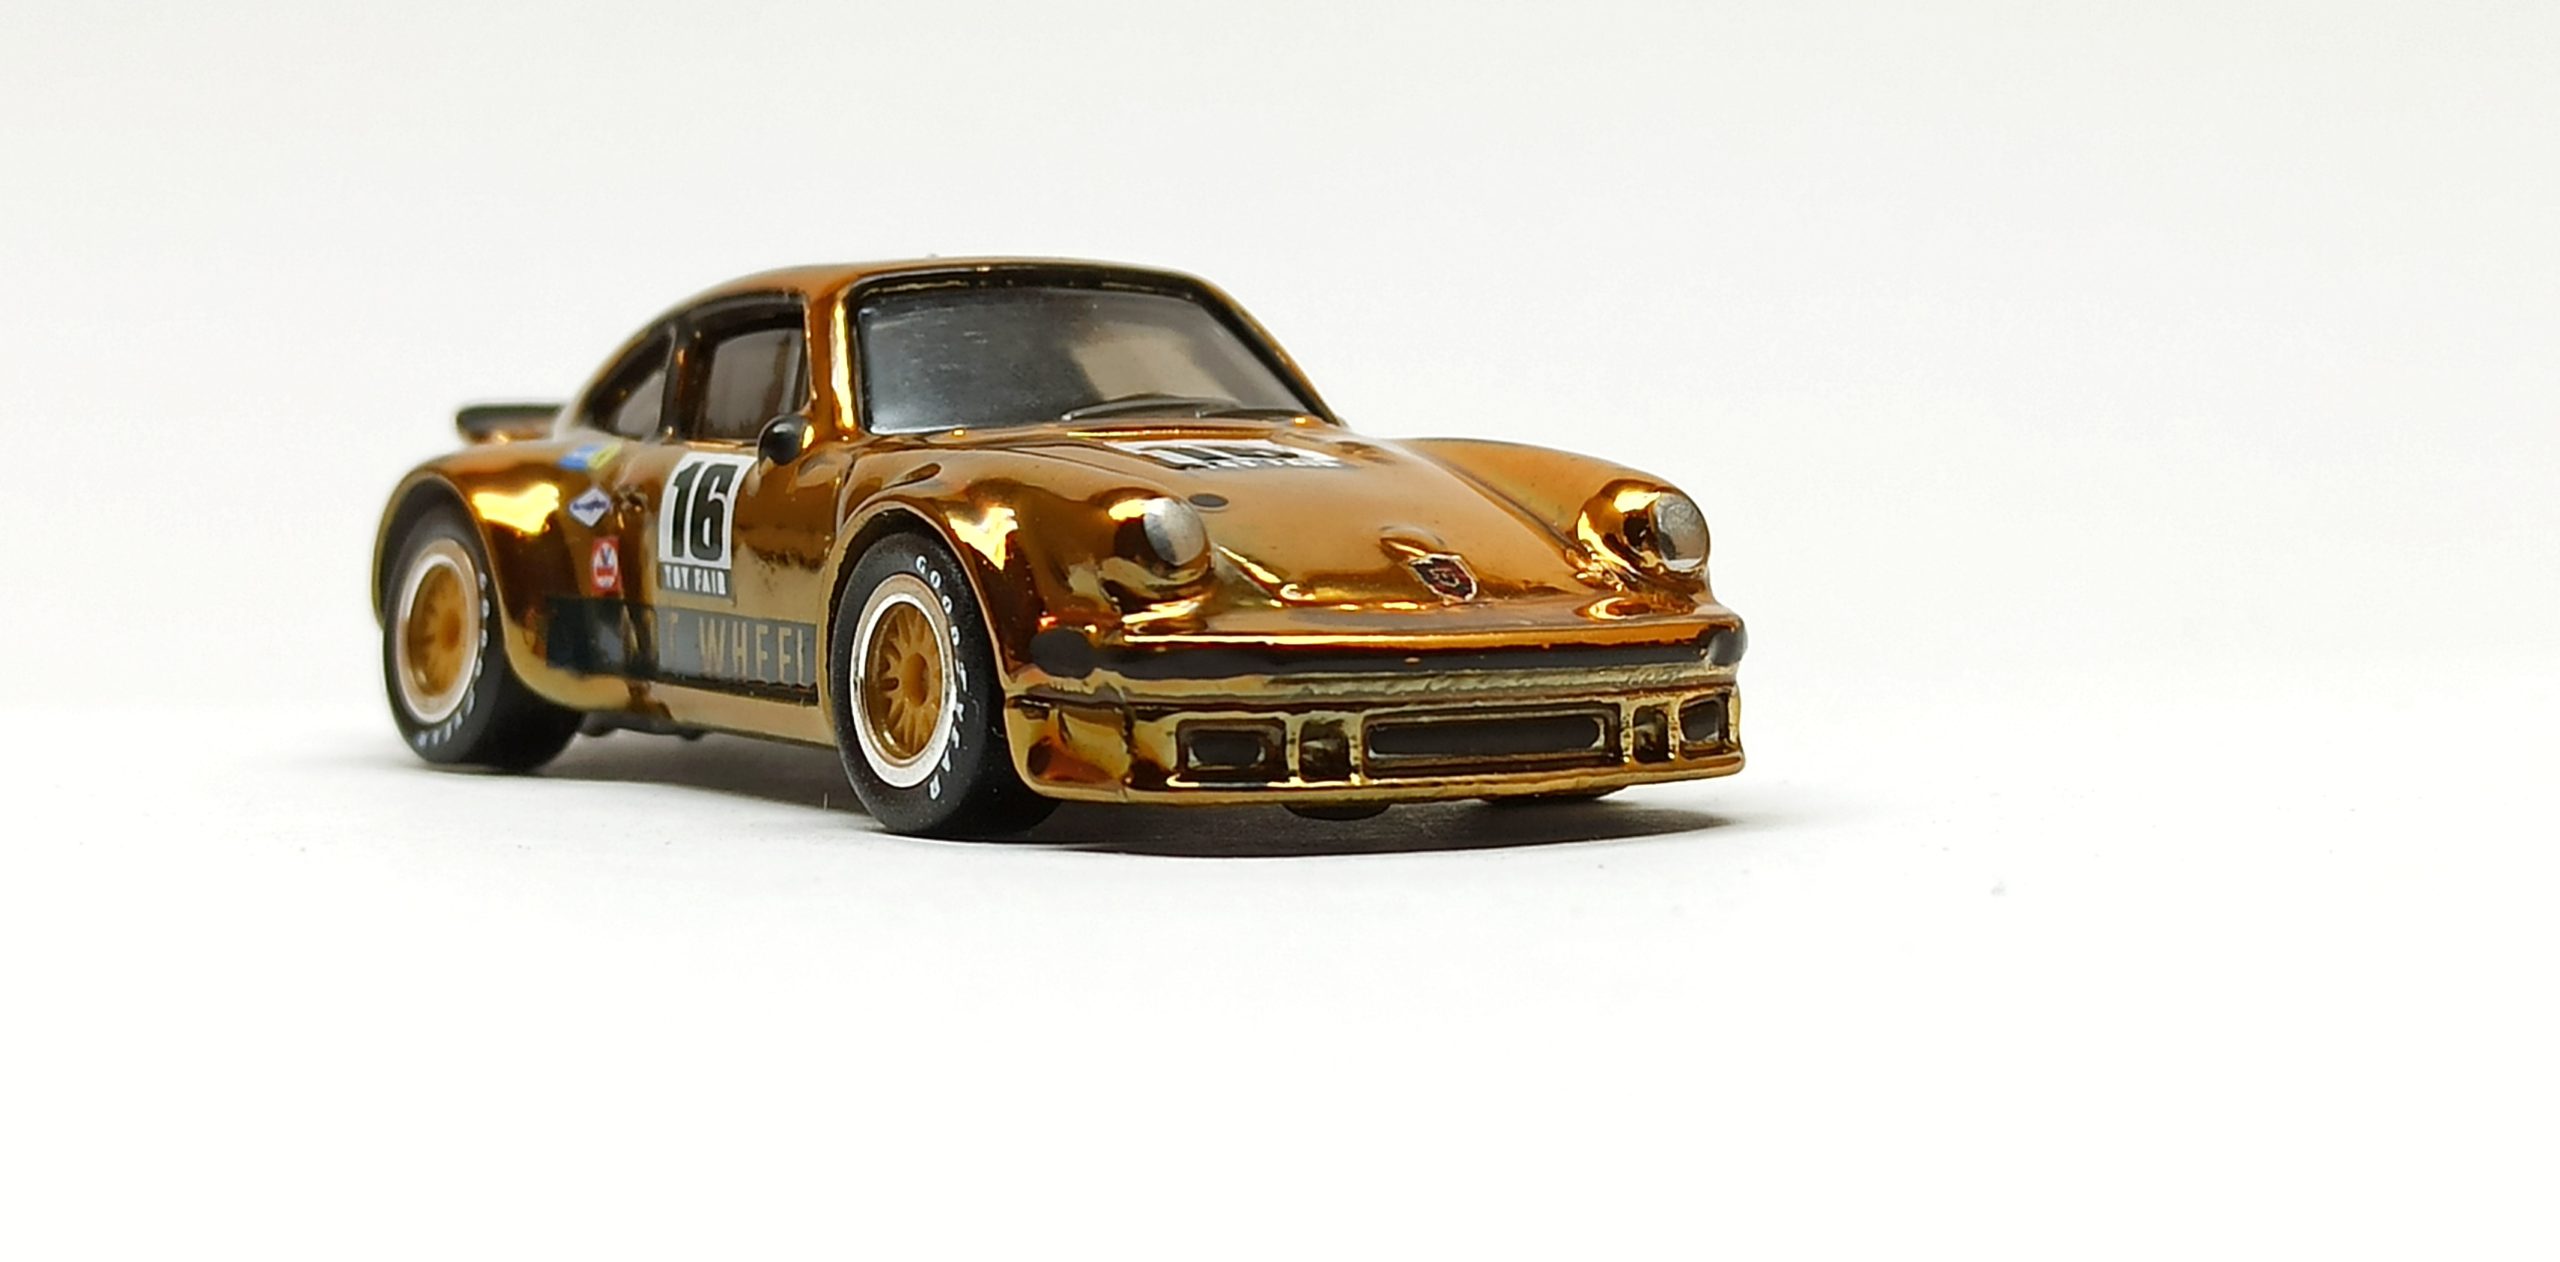 Hot Wheels Porsche 934 Turbo RSR (DJH70) 2016 Toy Fair chrome gold custom